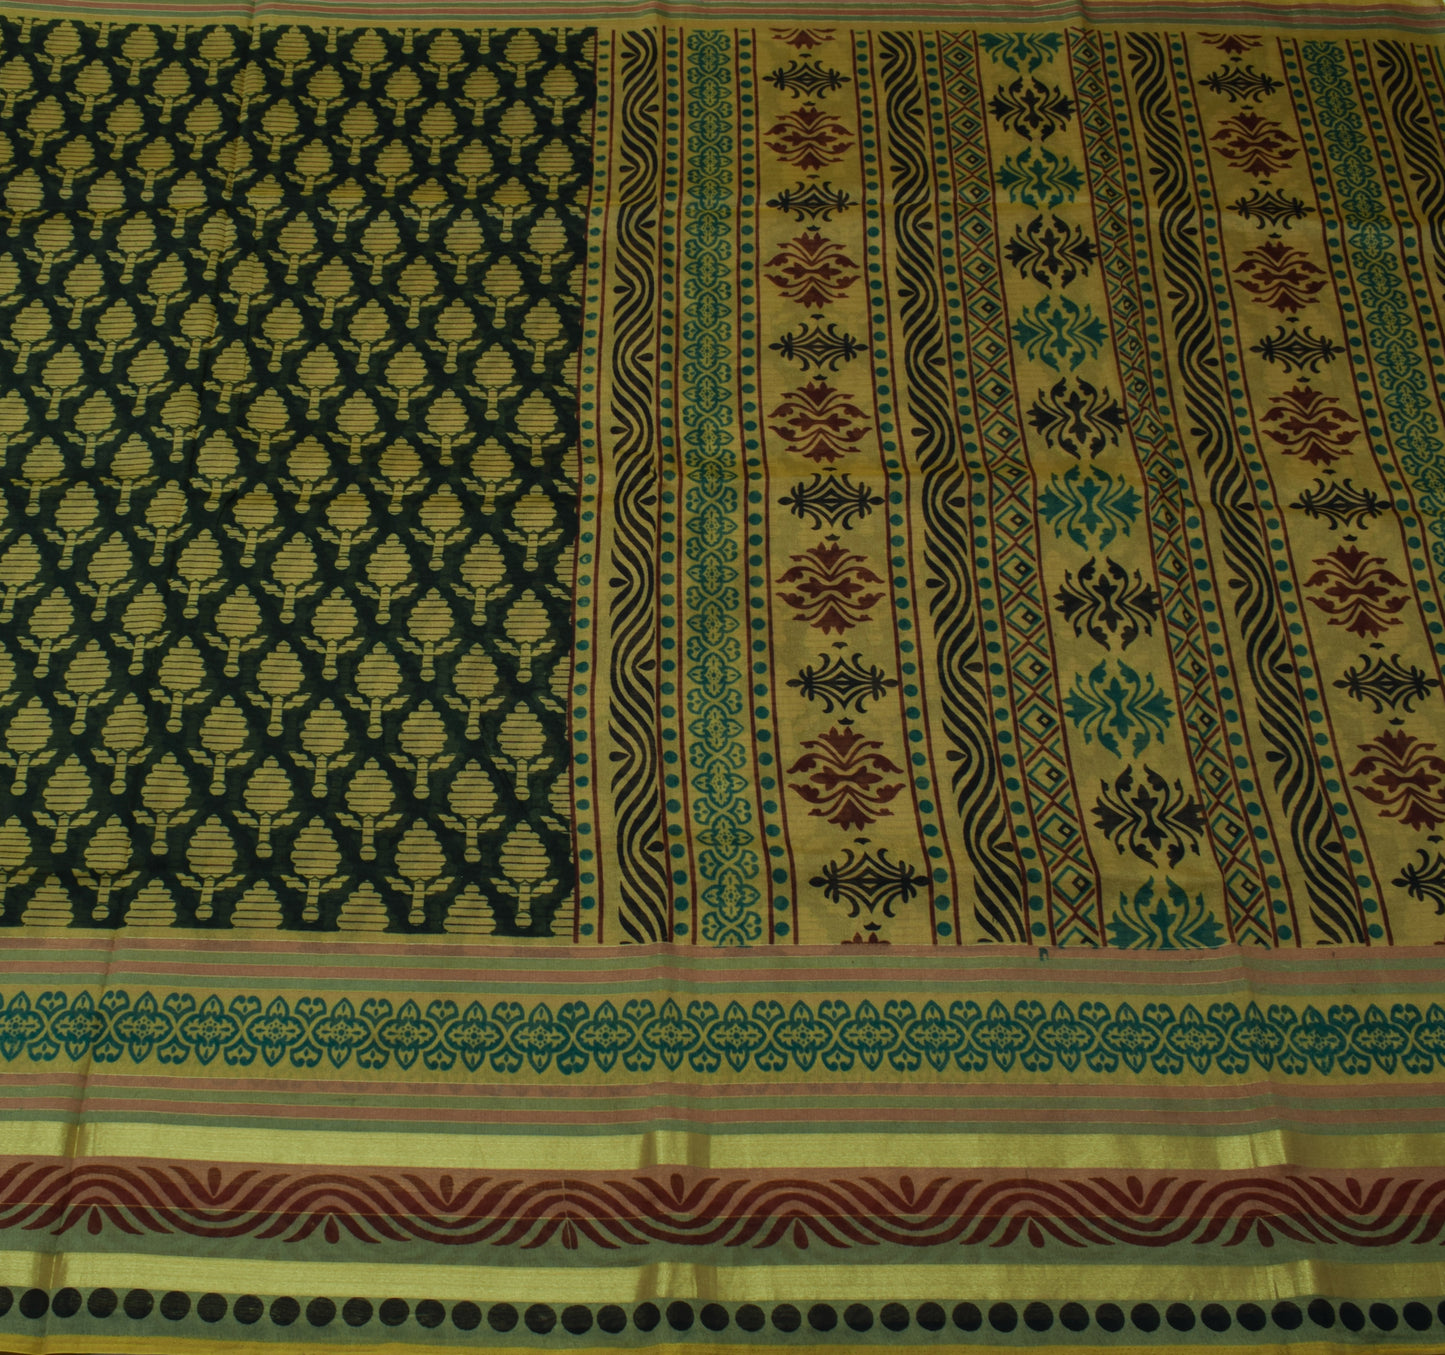 Sushila Vintage Teal Green Saree Blend Cotton Printed Floral Soft Craft Fabric